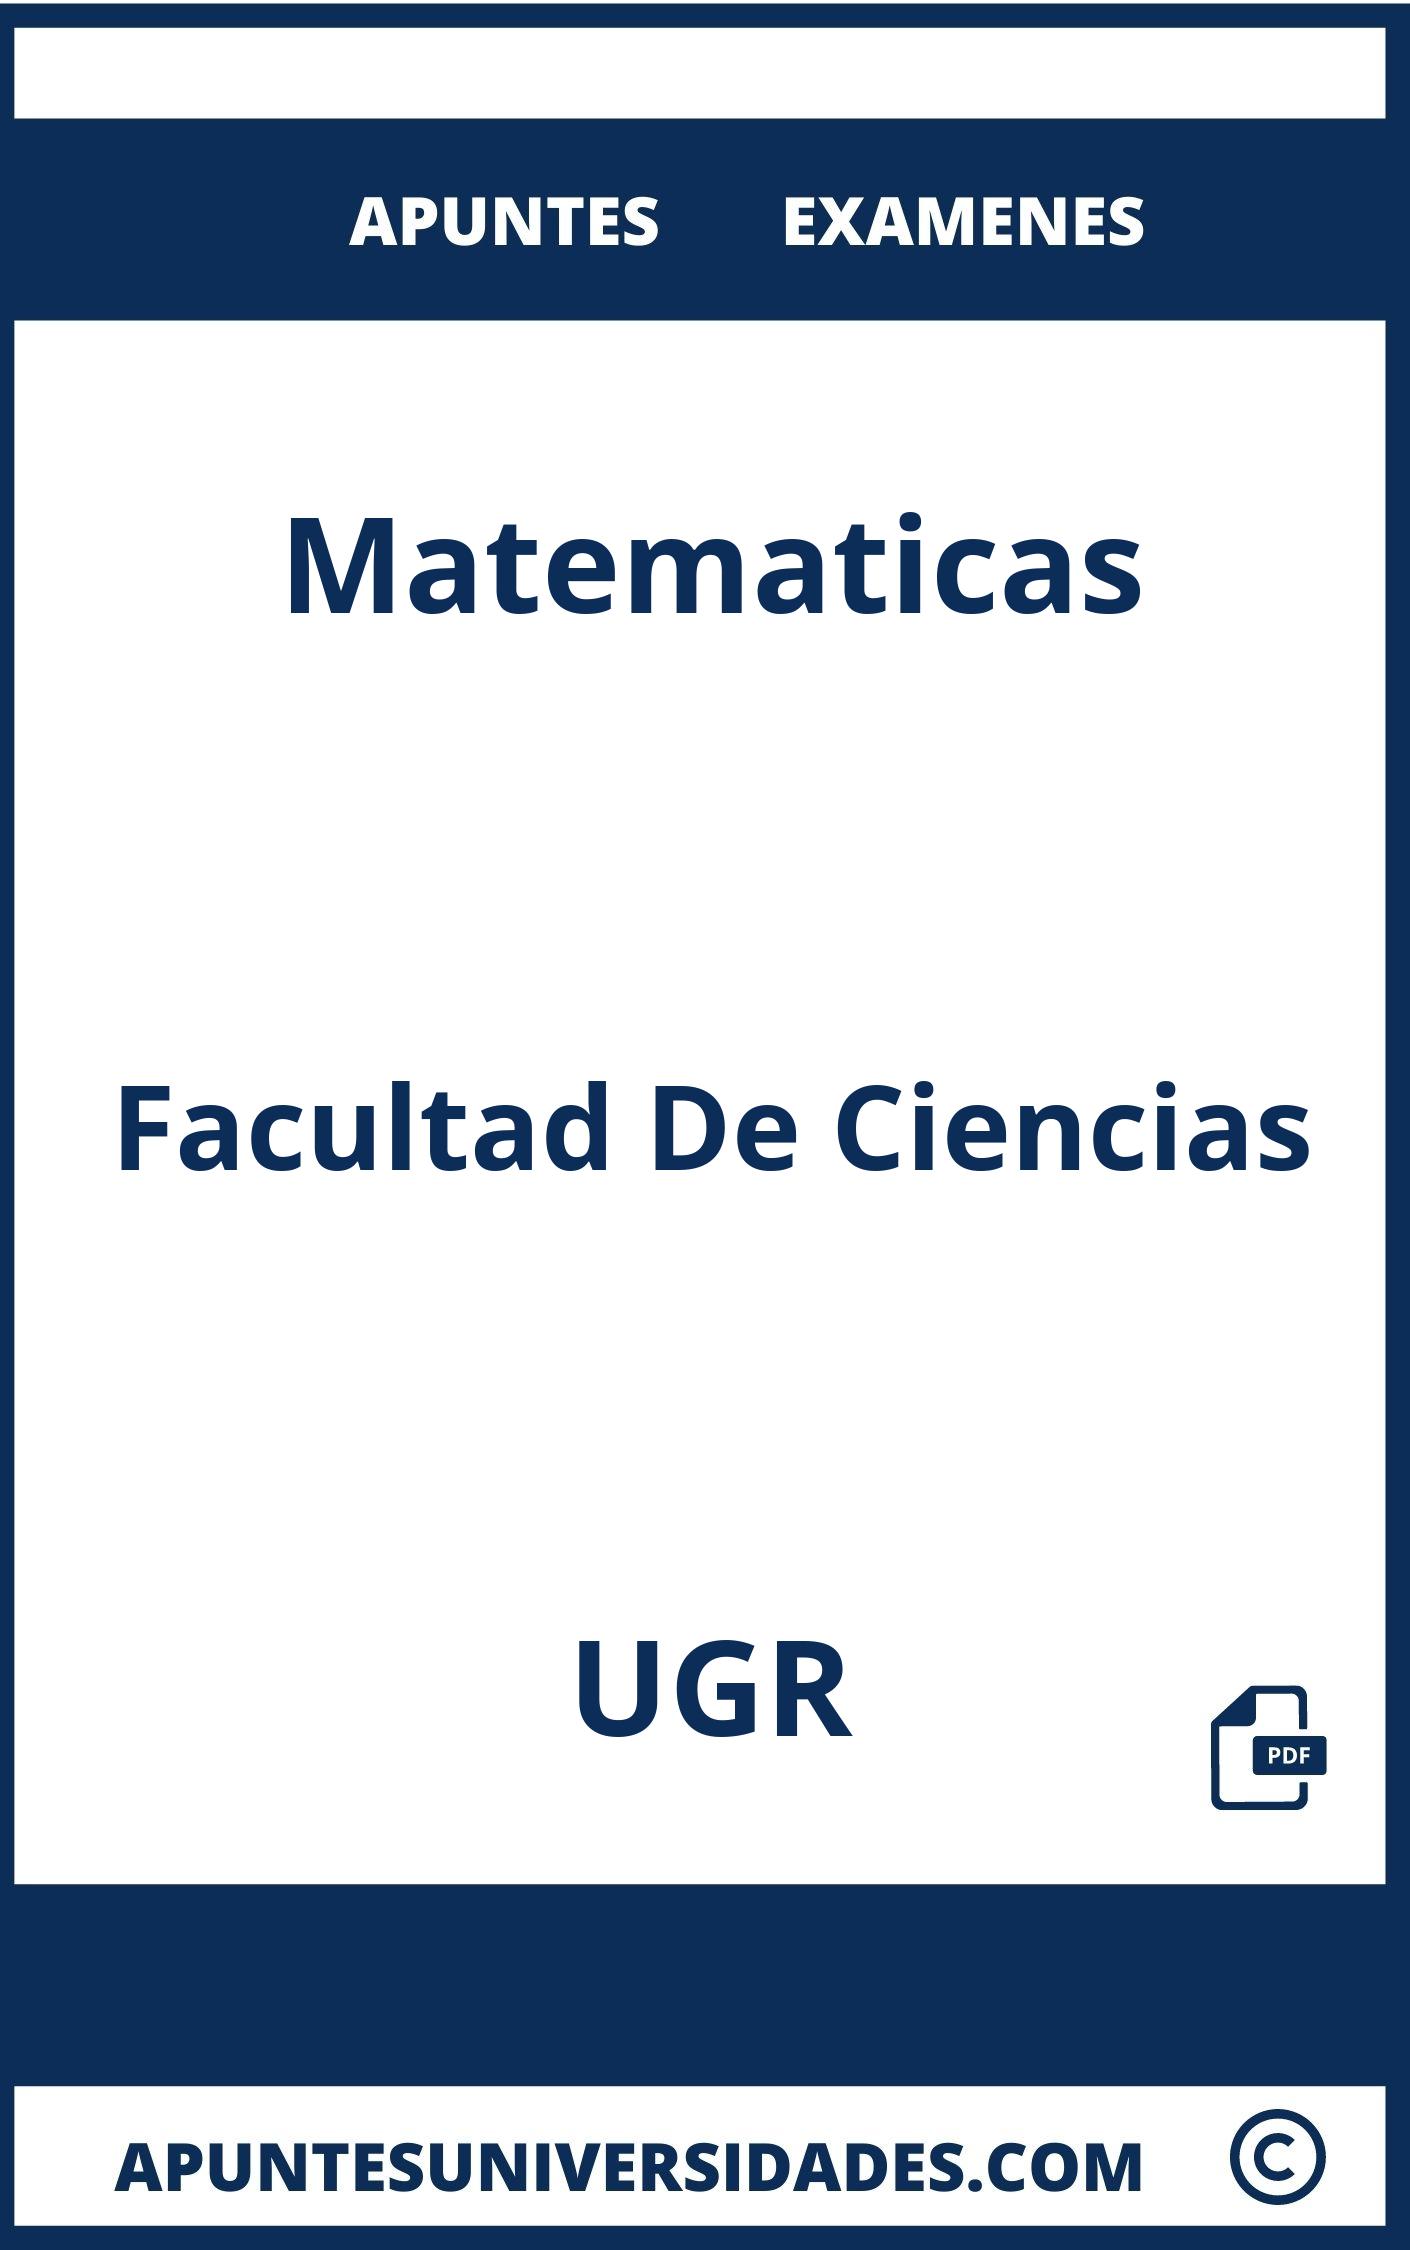 Examenes Apuntes Matematicas UGR